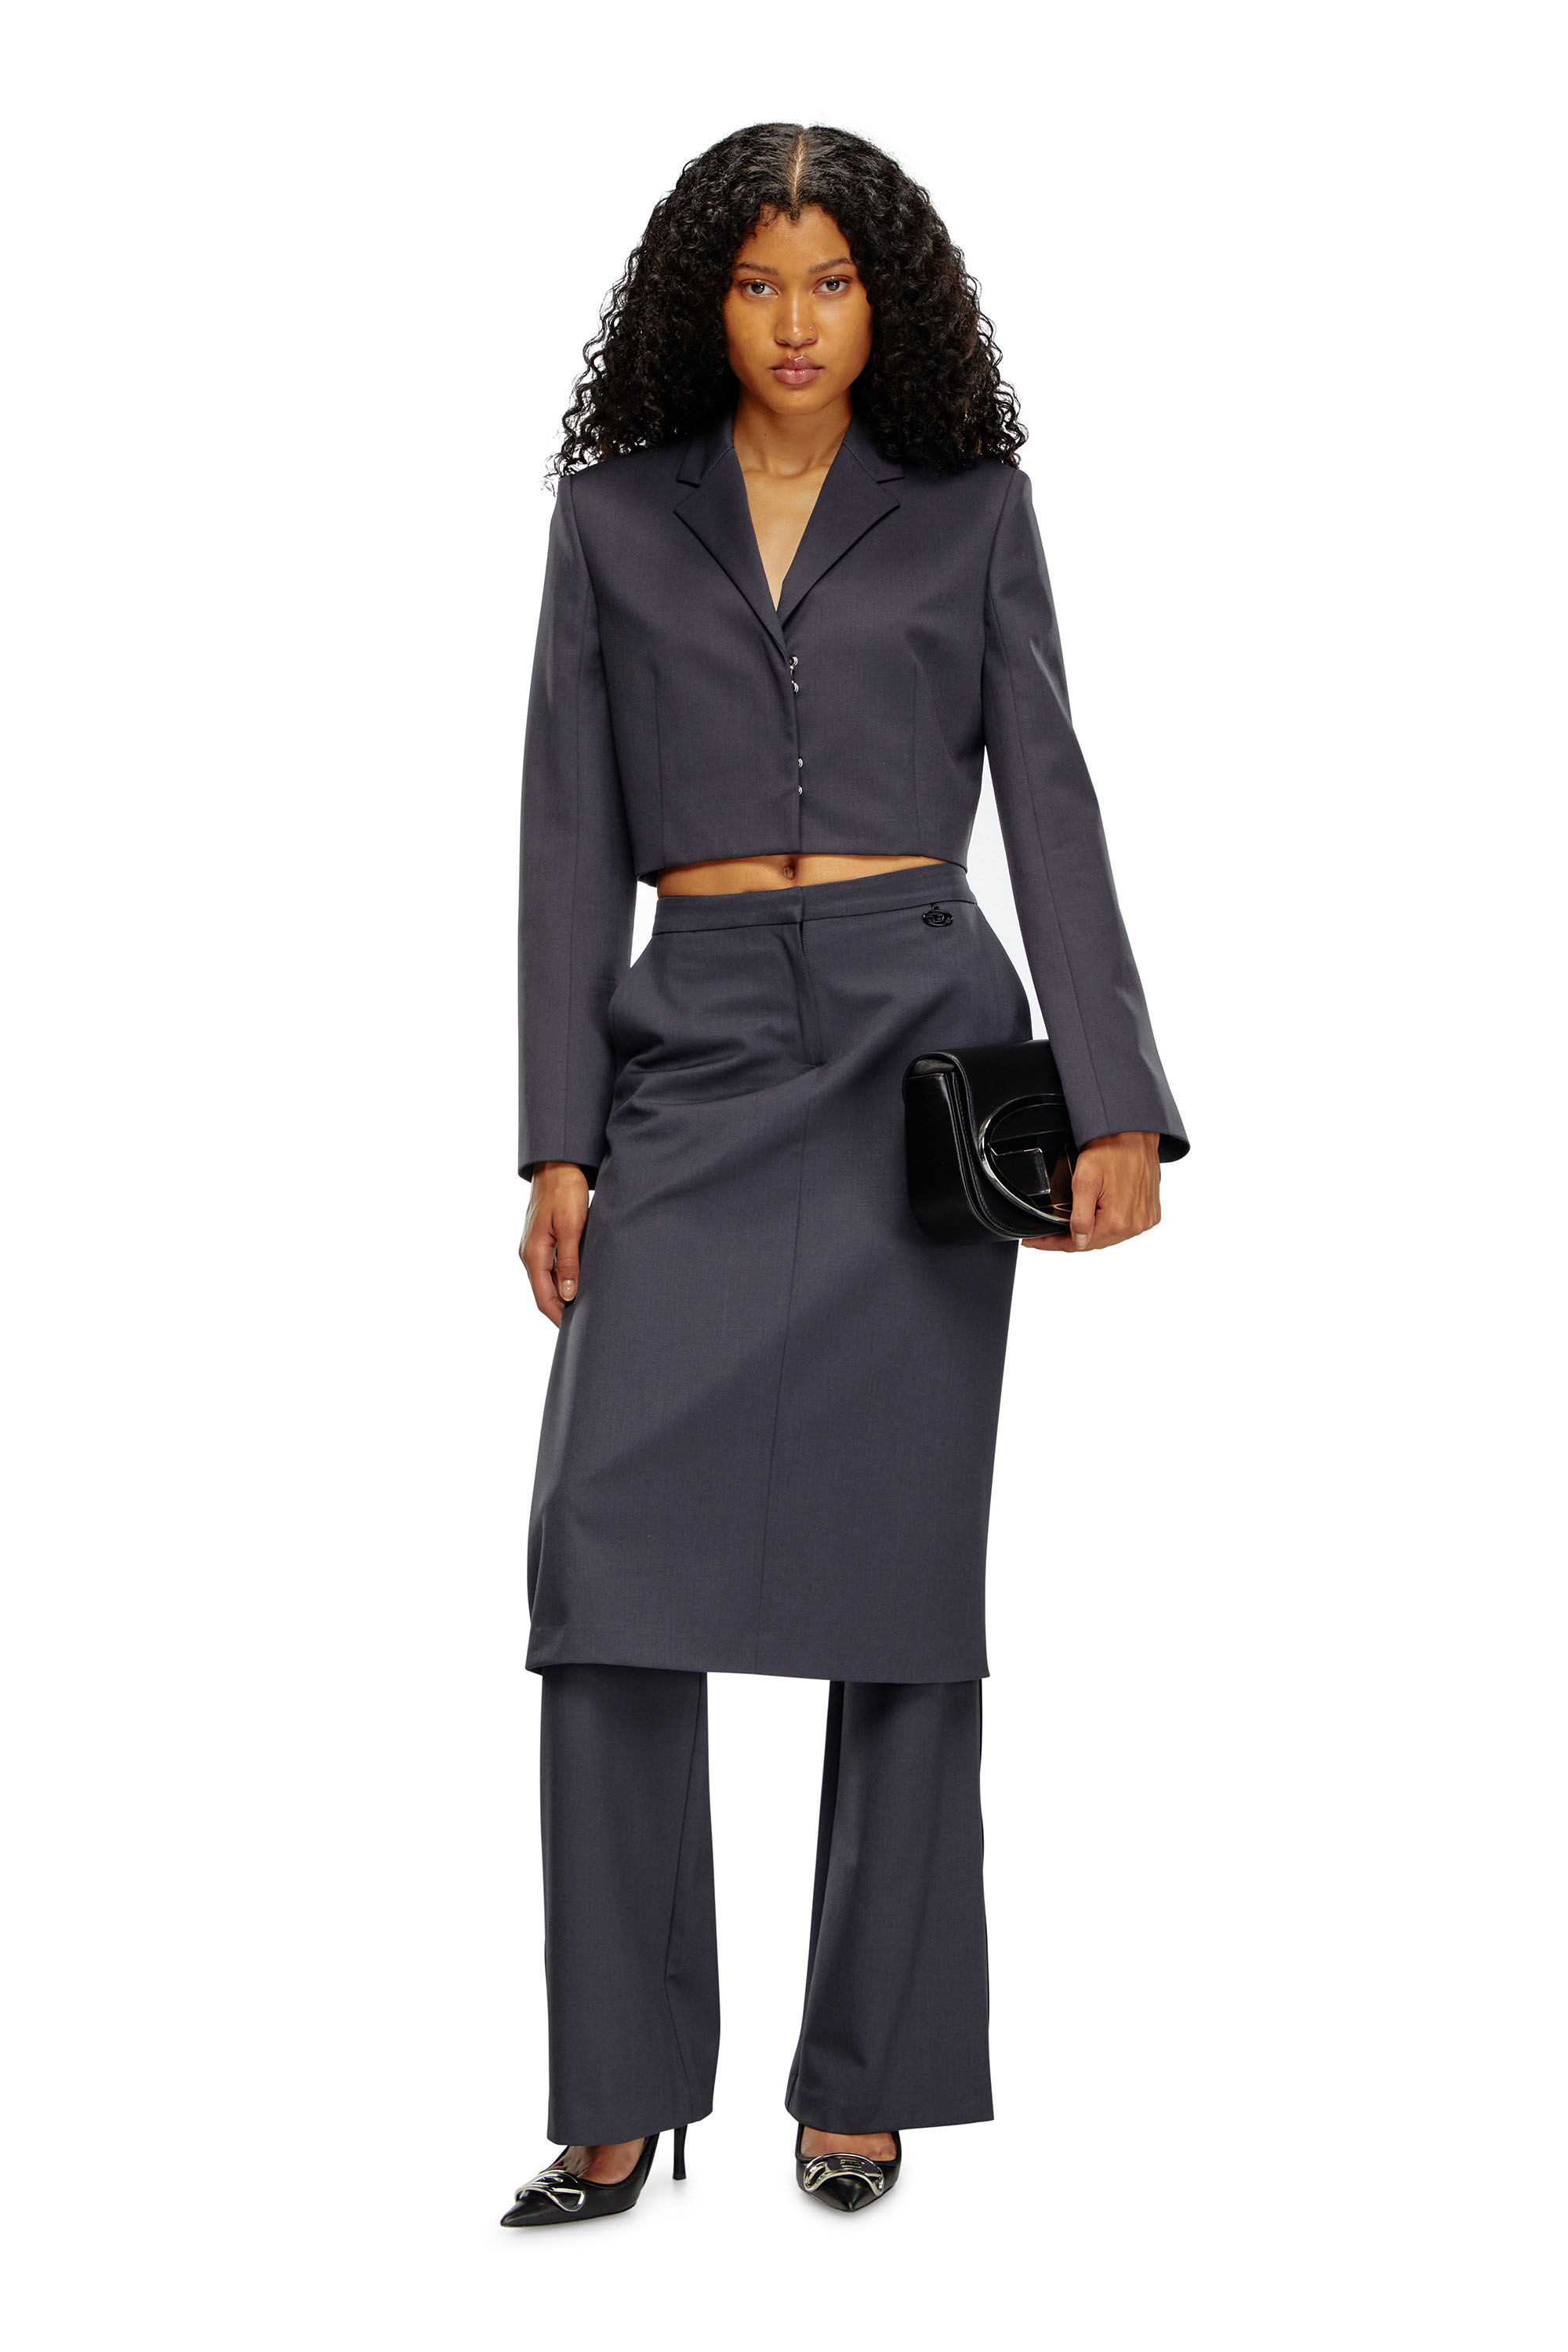 Diesel - G-MILLA-P1, Female Cropped blazer in stretch wool blend in グレー - Image 1